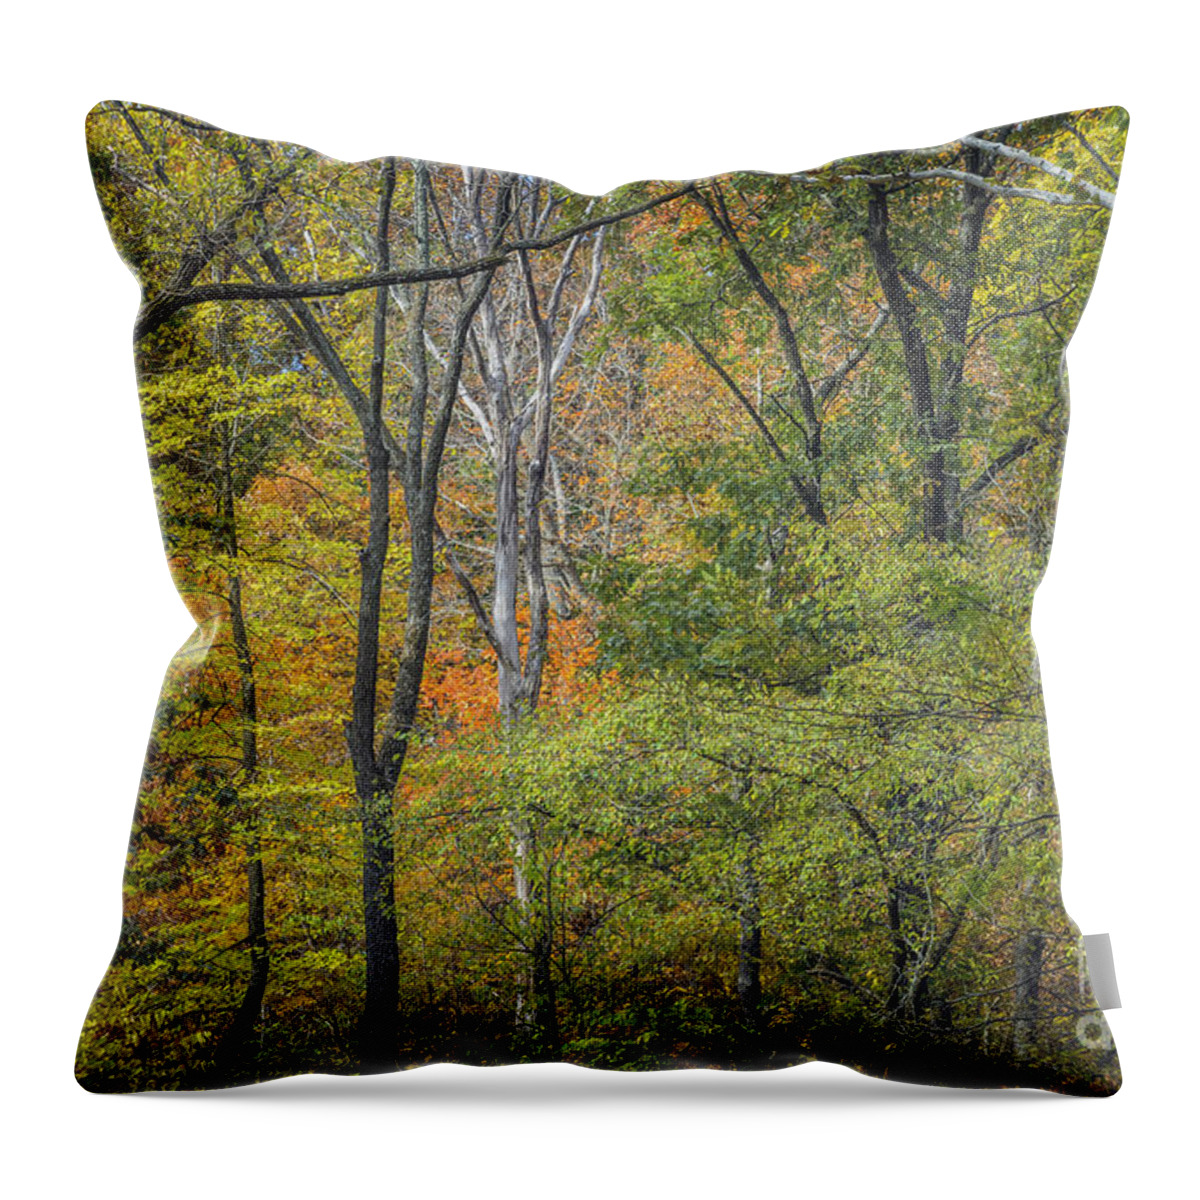 Autumn Throw Pillow featuring the photograph Autumn Tapestry by Tamara Becker